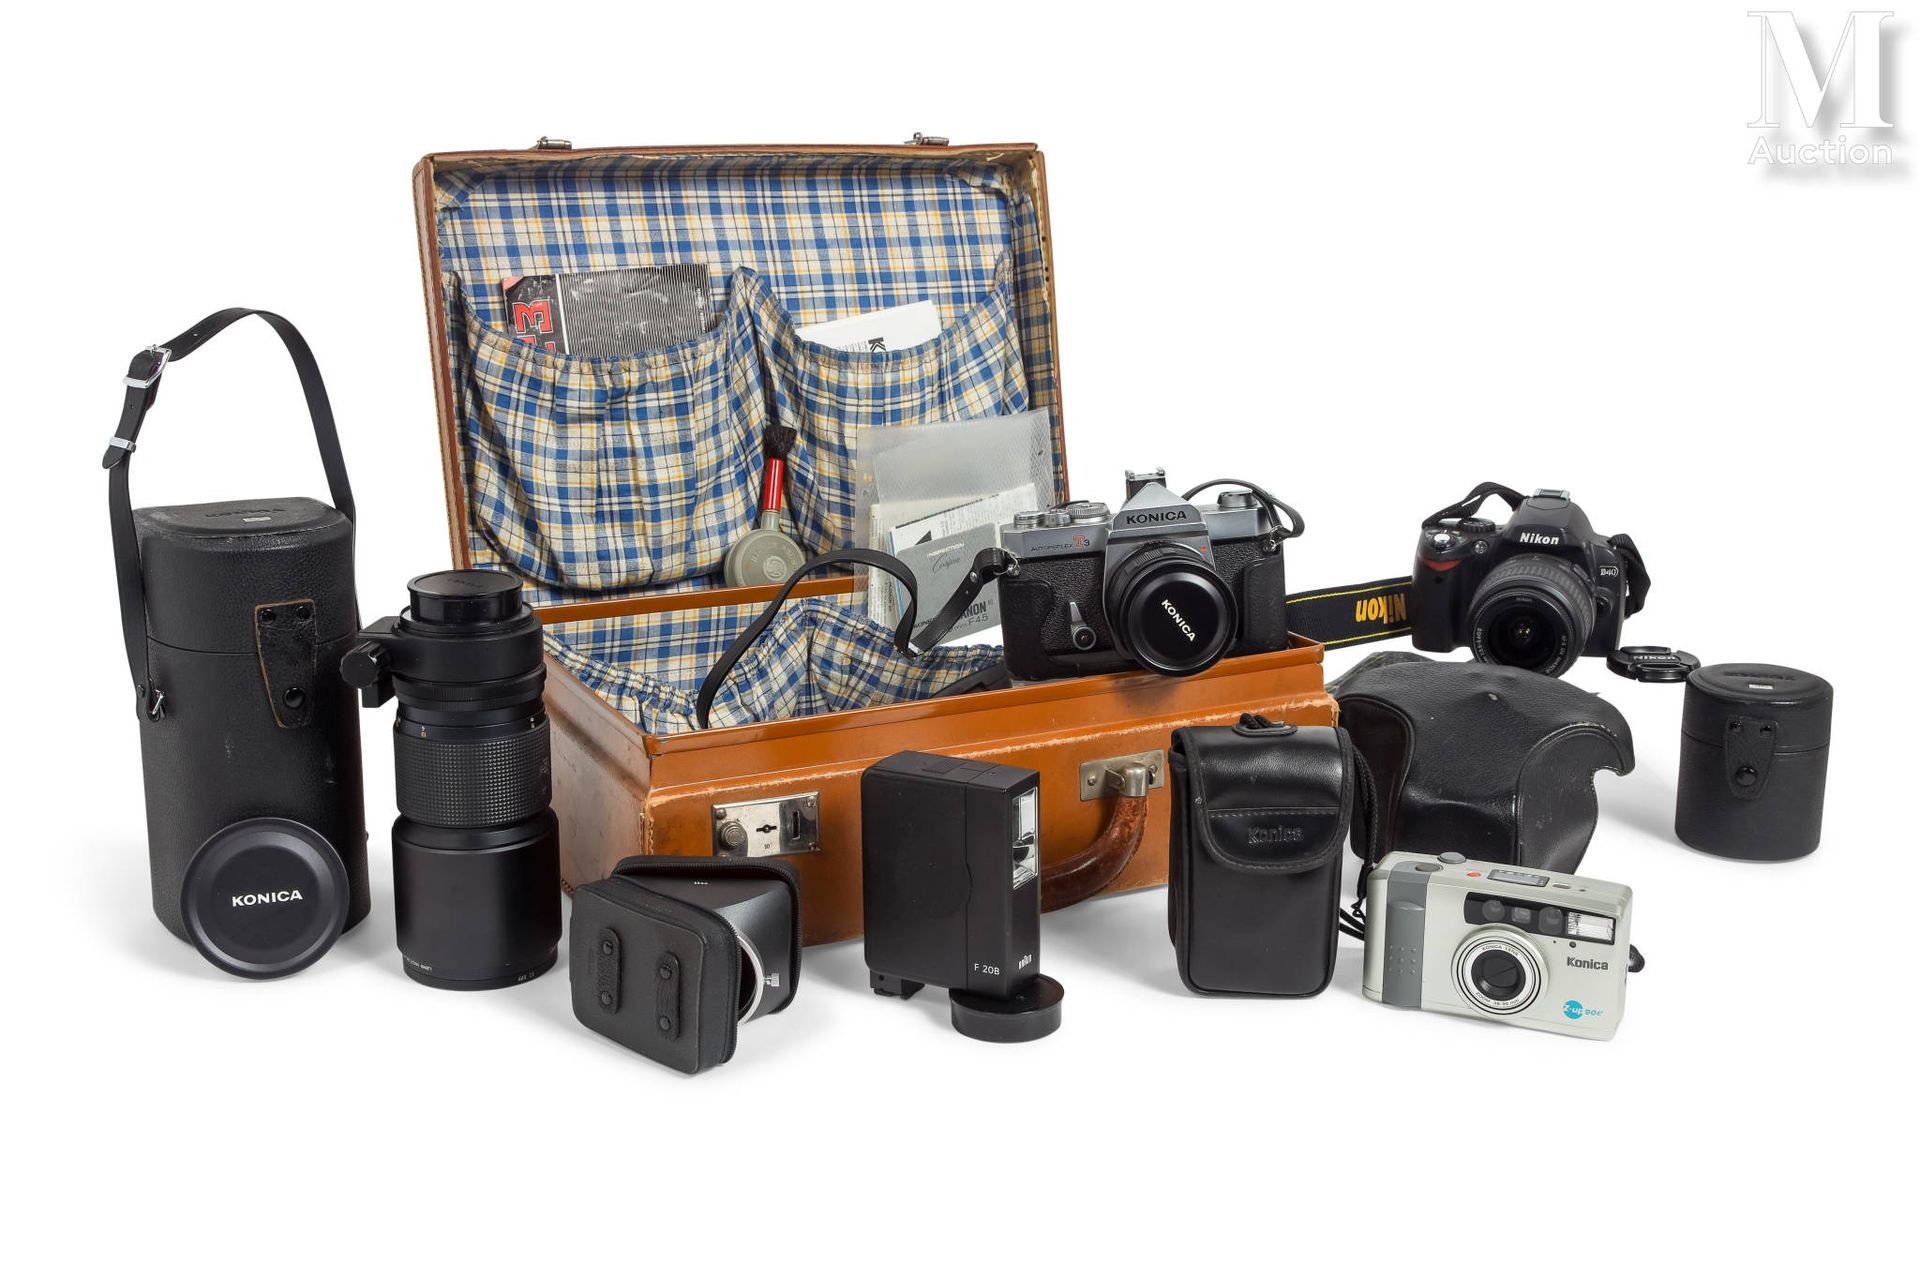 KONICA 装有多个镜头的柯尼卡相机 
300 毫米镜头盒 
35 毫米镜头 

还包括
尼康 D40 数码单反相机
KONIKA ZUP90 相机